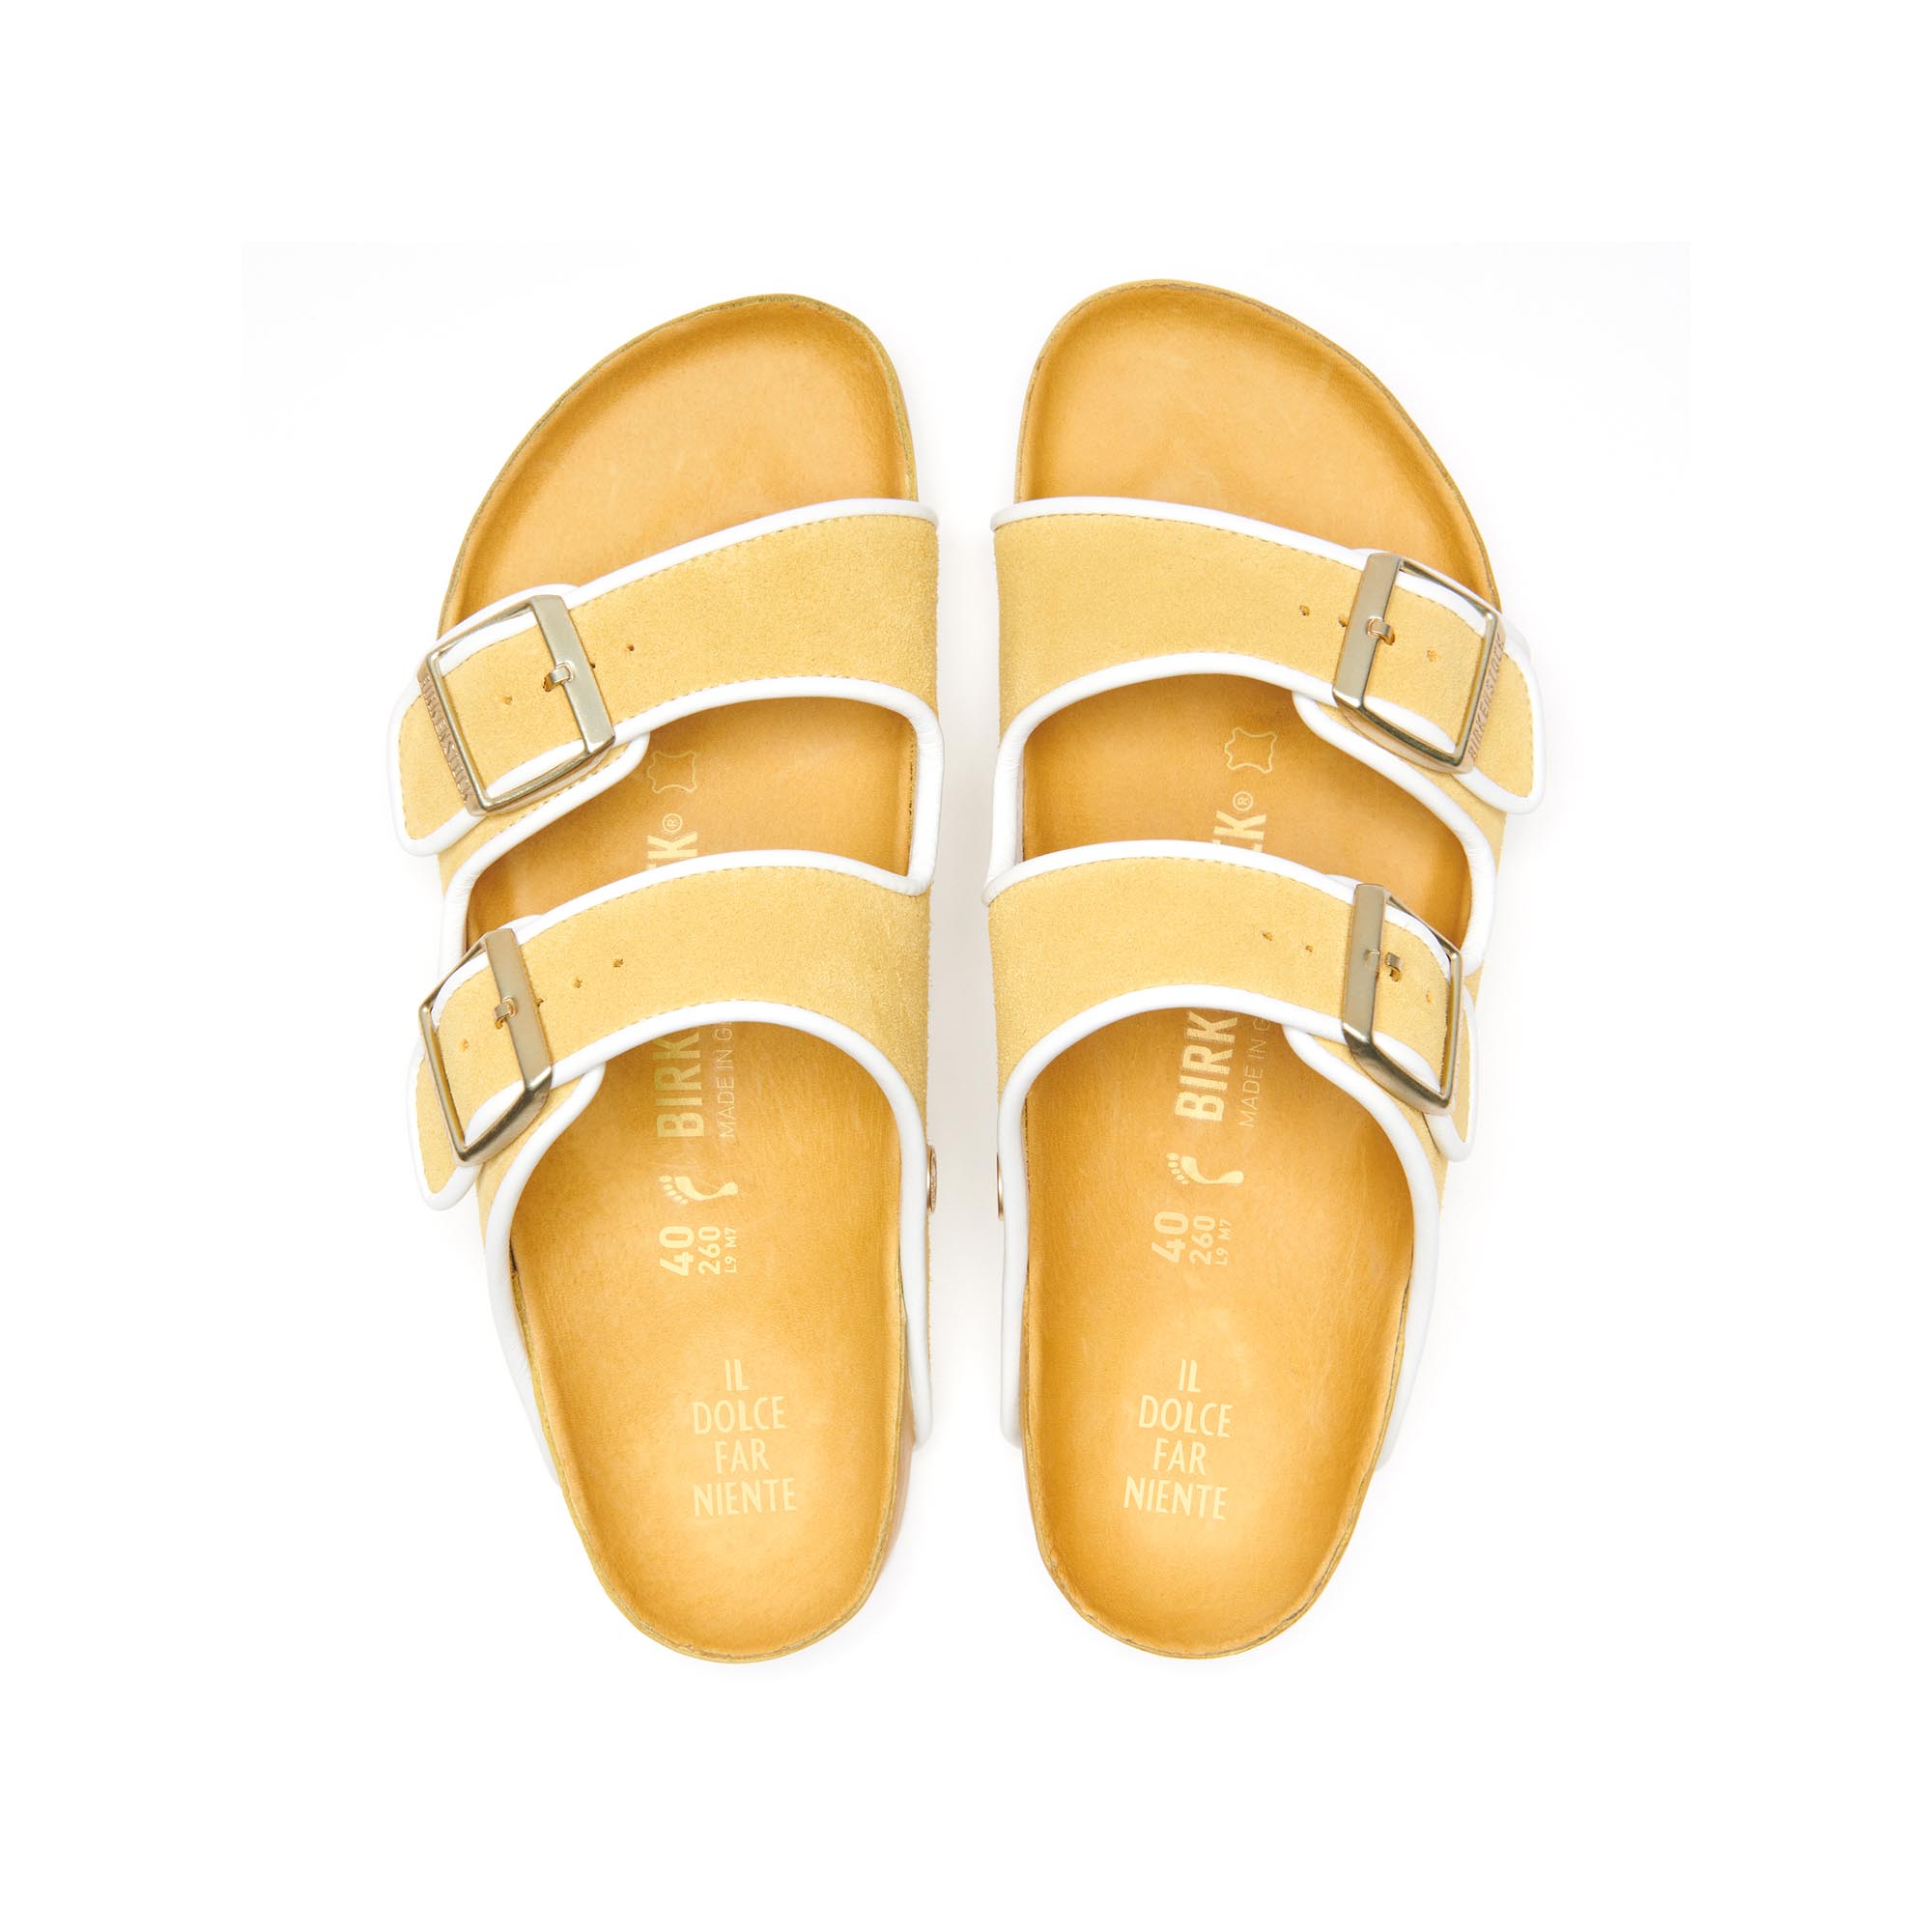 Mellow Yellow обувь. Birkenstock желтые. Birkenstock детские желтые. Birkenstock Arizona желтые. Il dolce